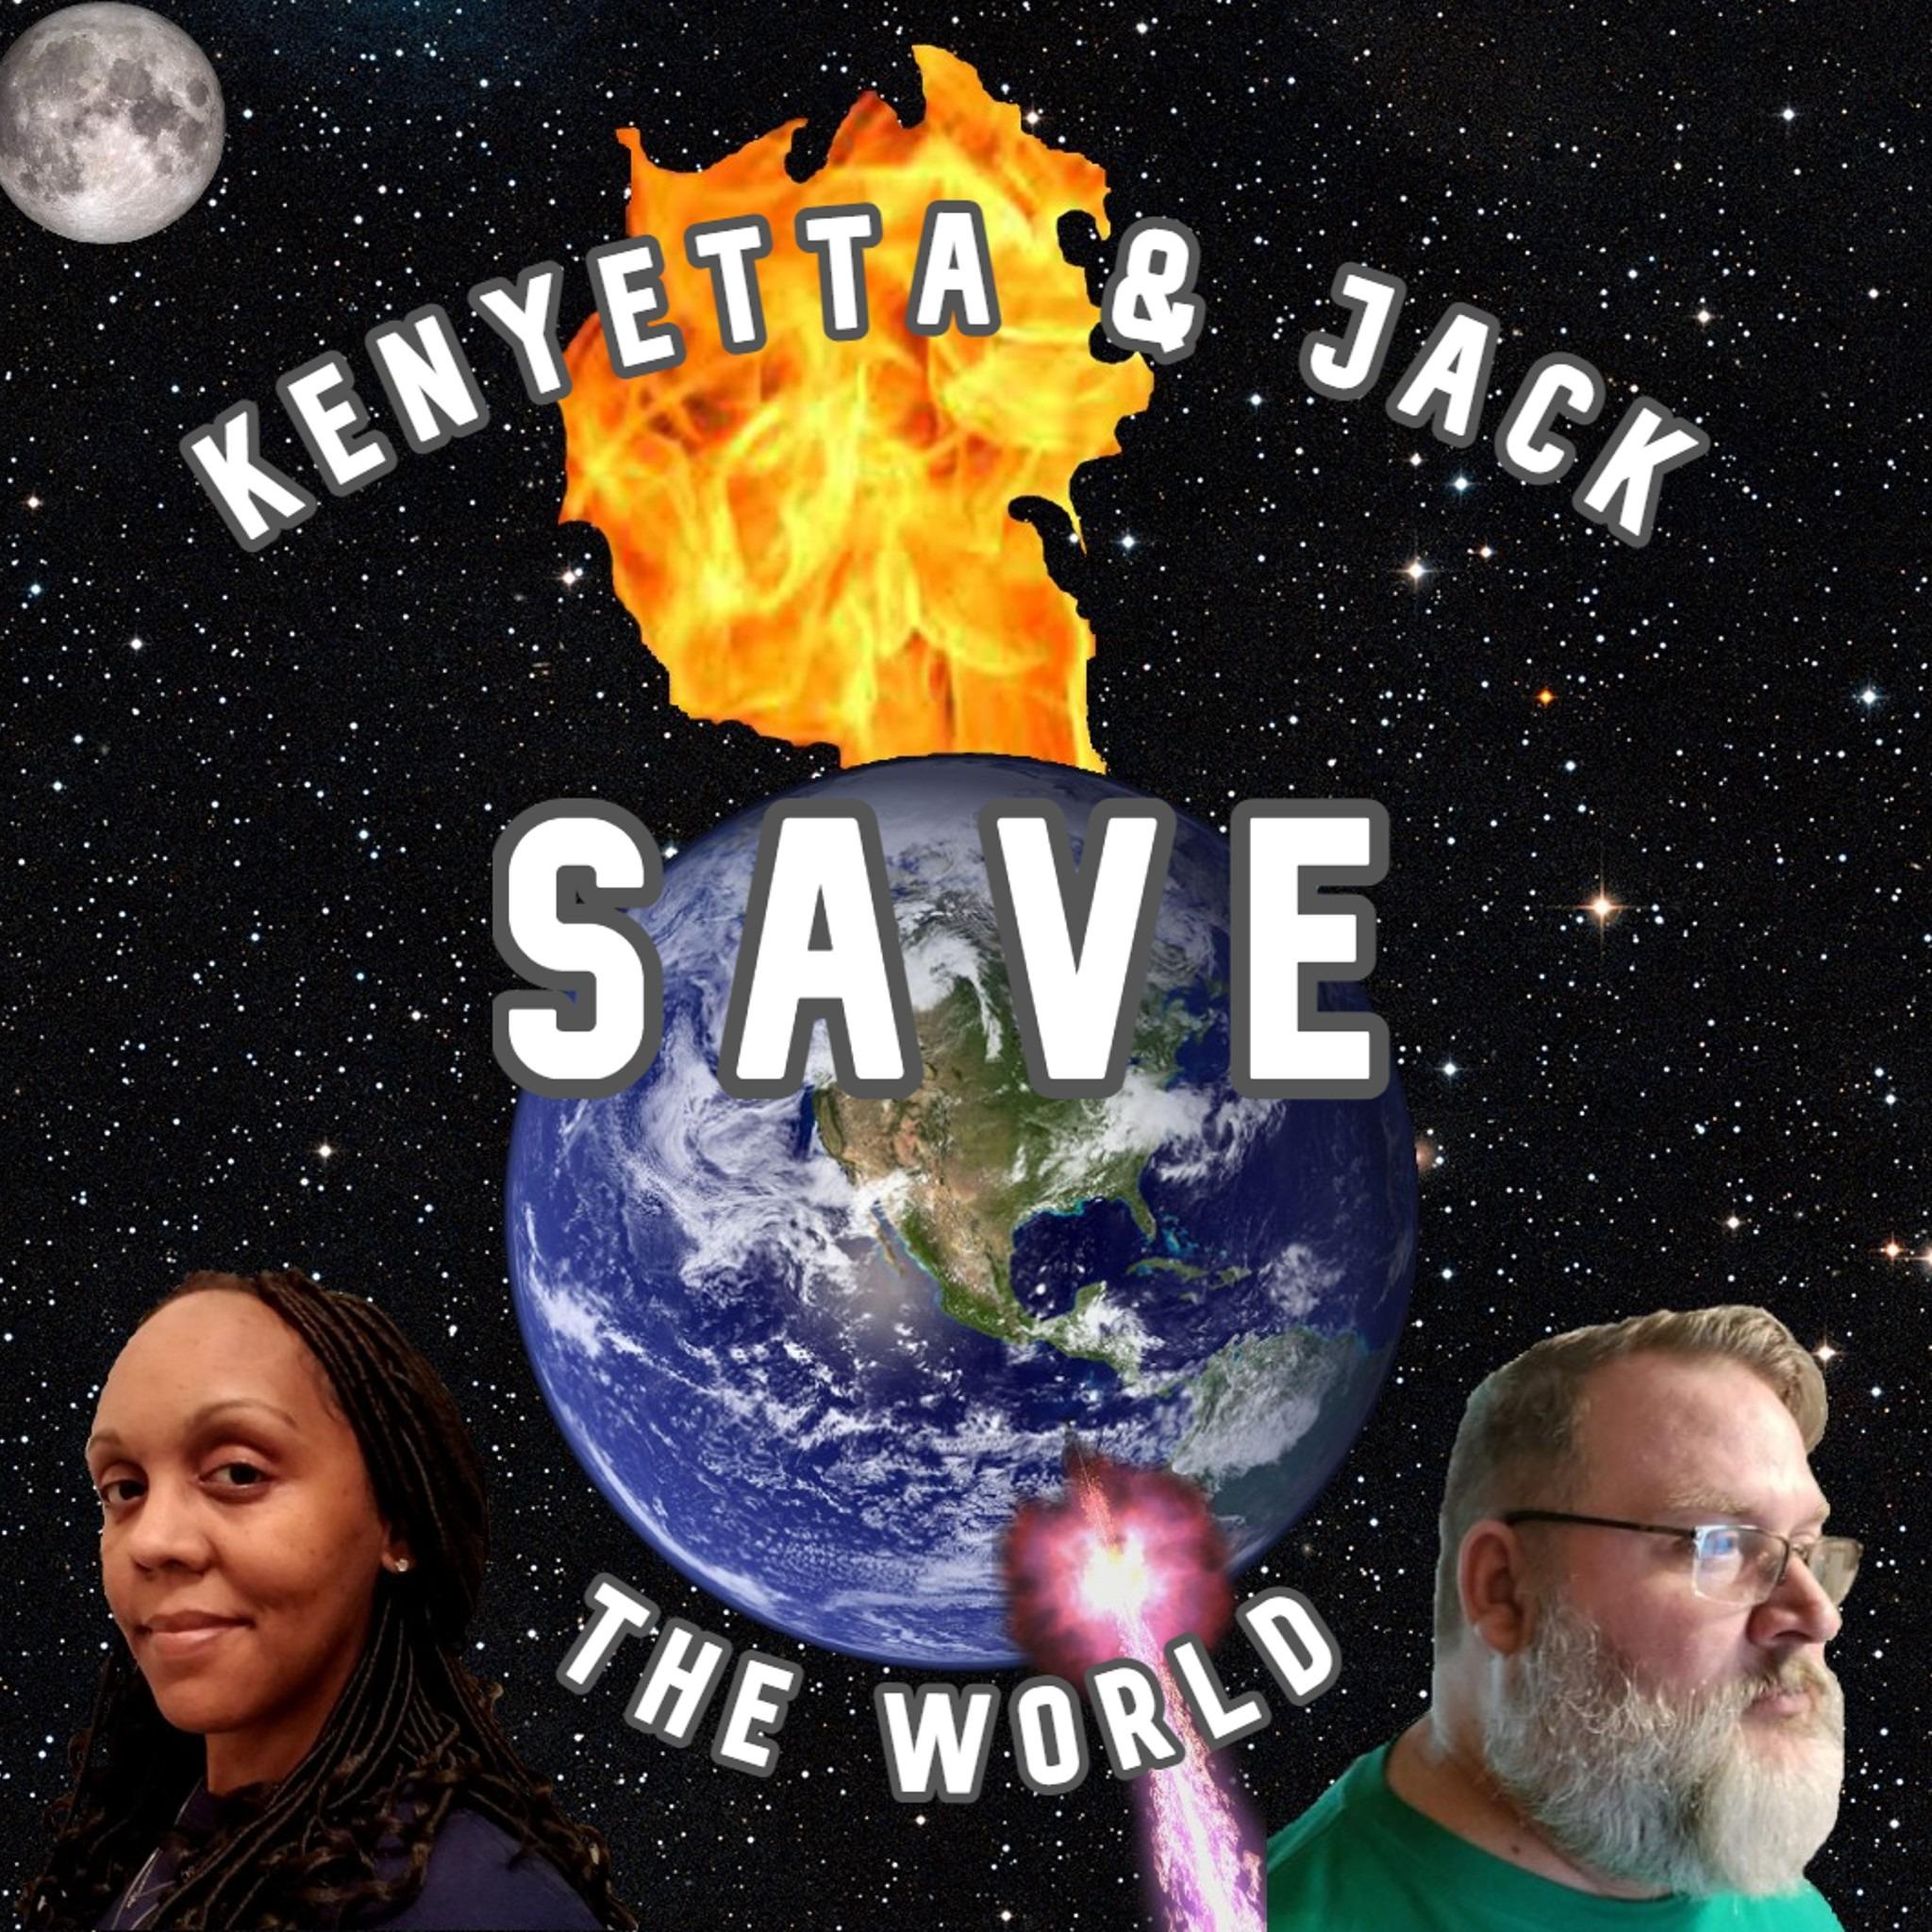 Kenyetta & Jack Save the World